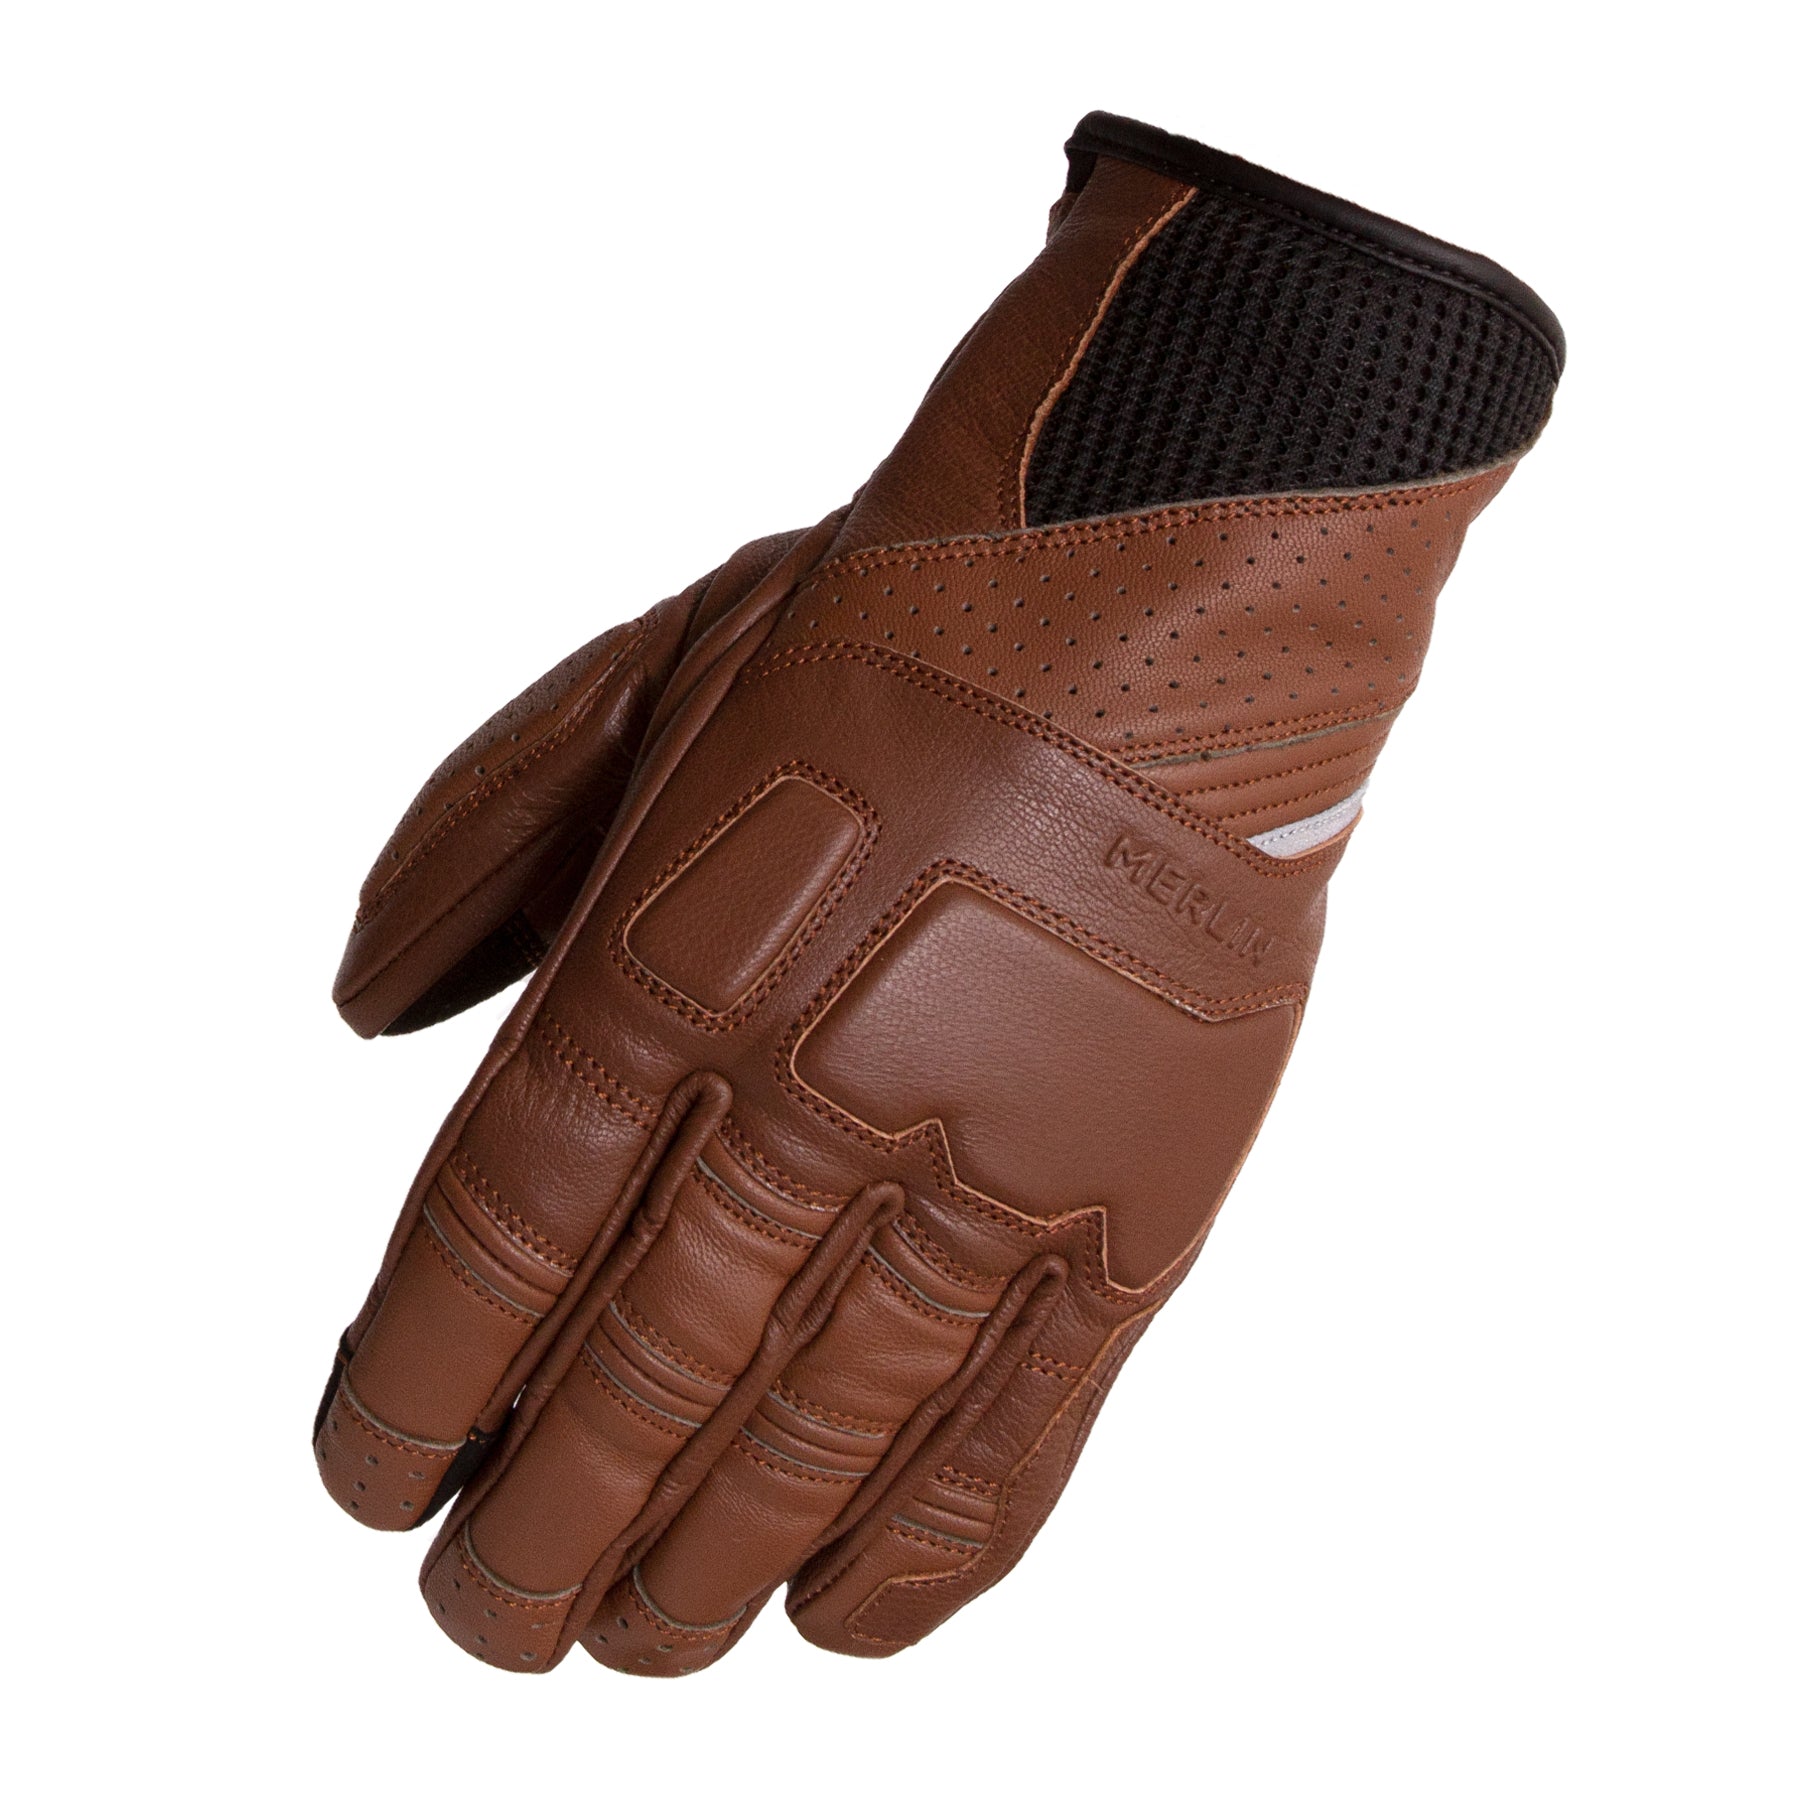 Salado Leather Glove